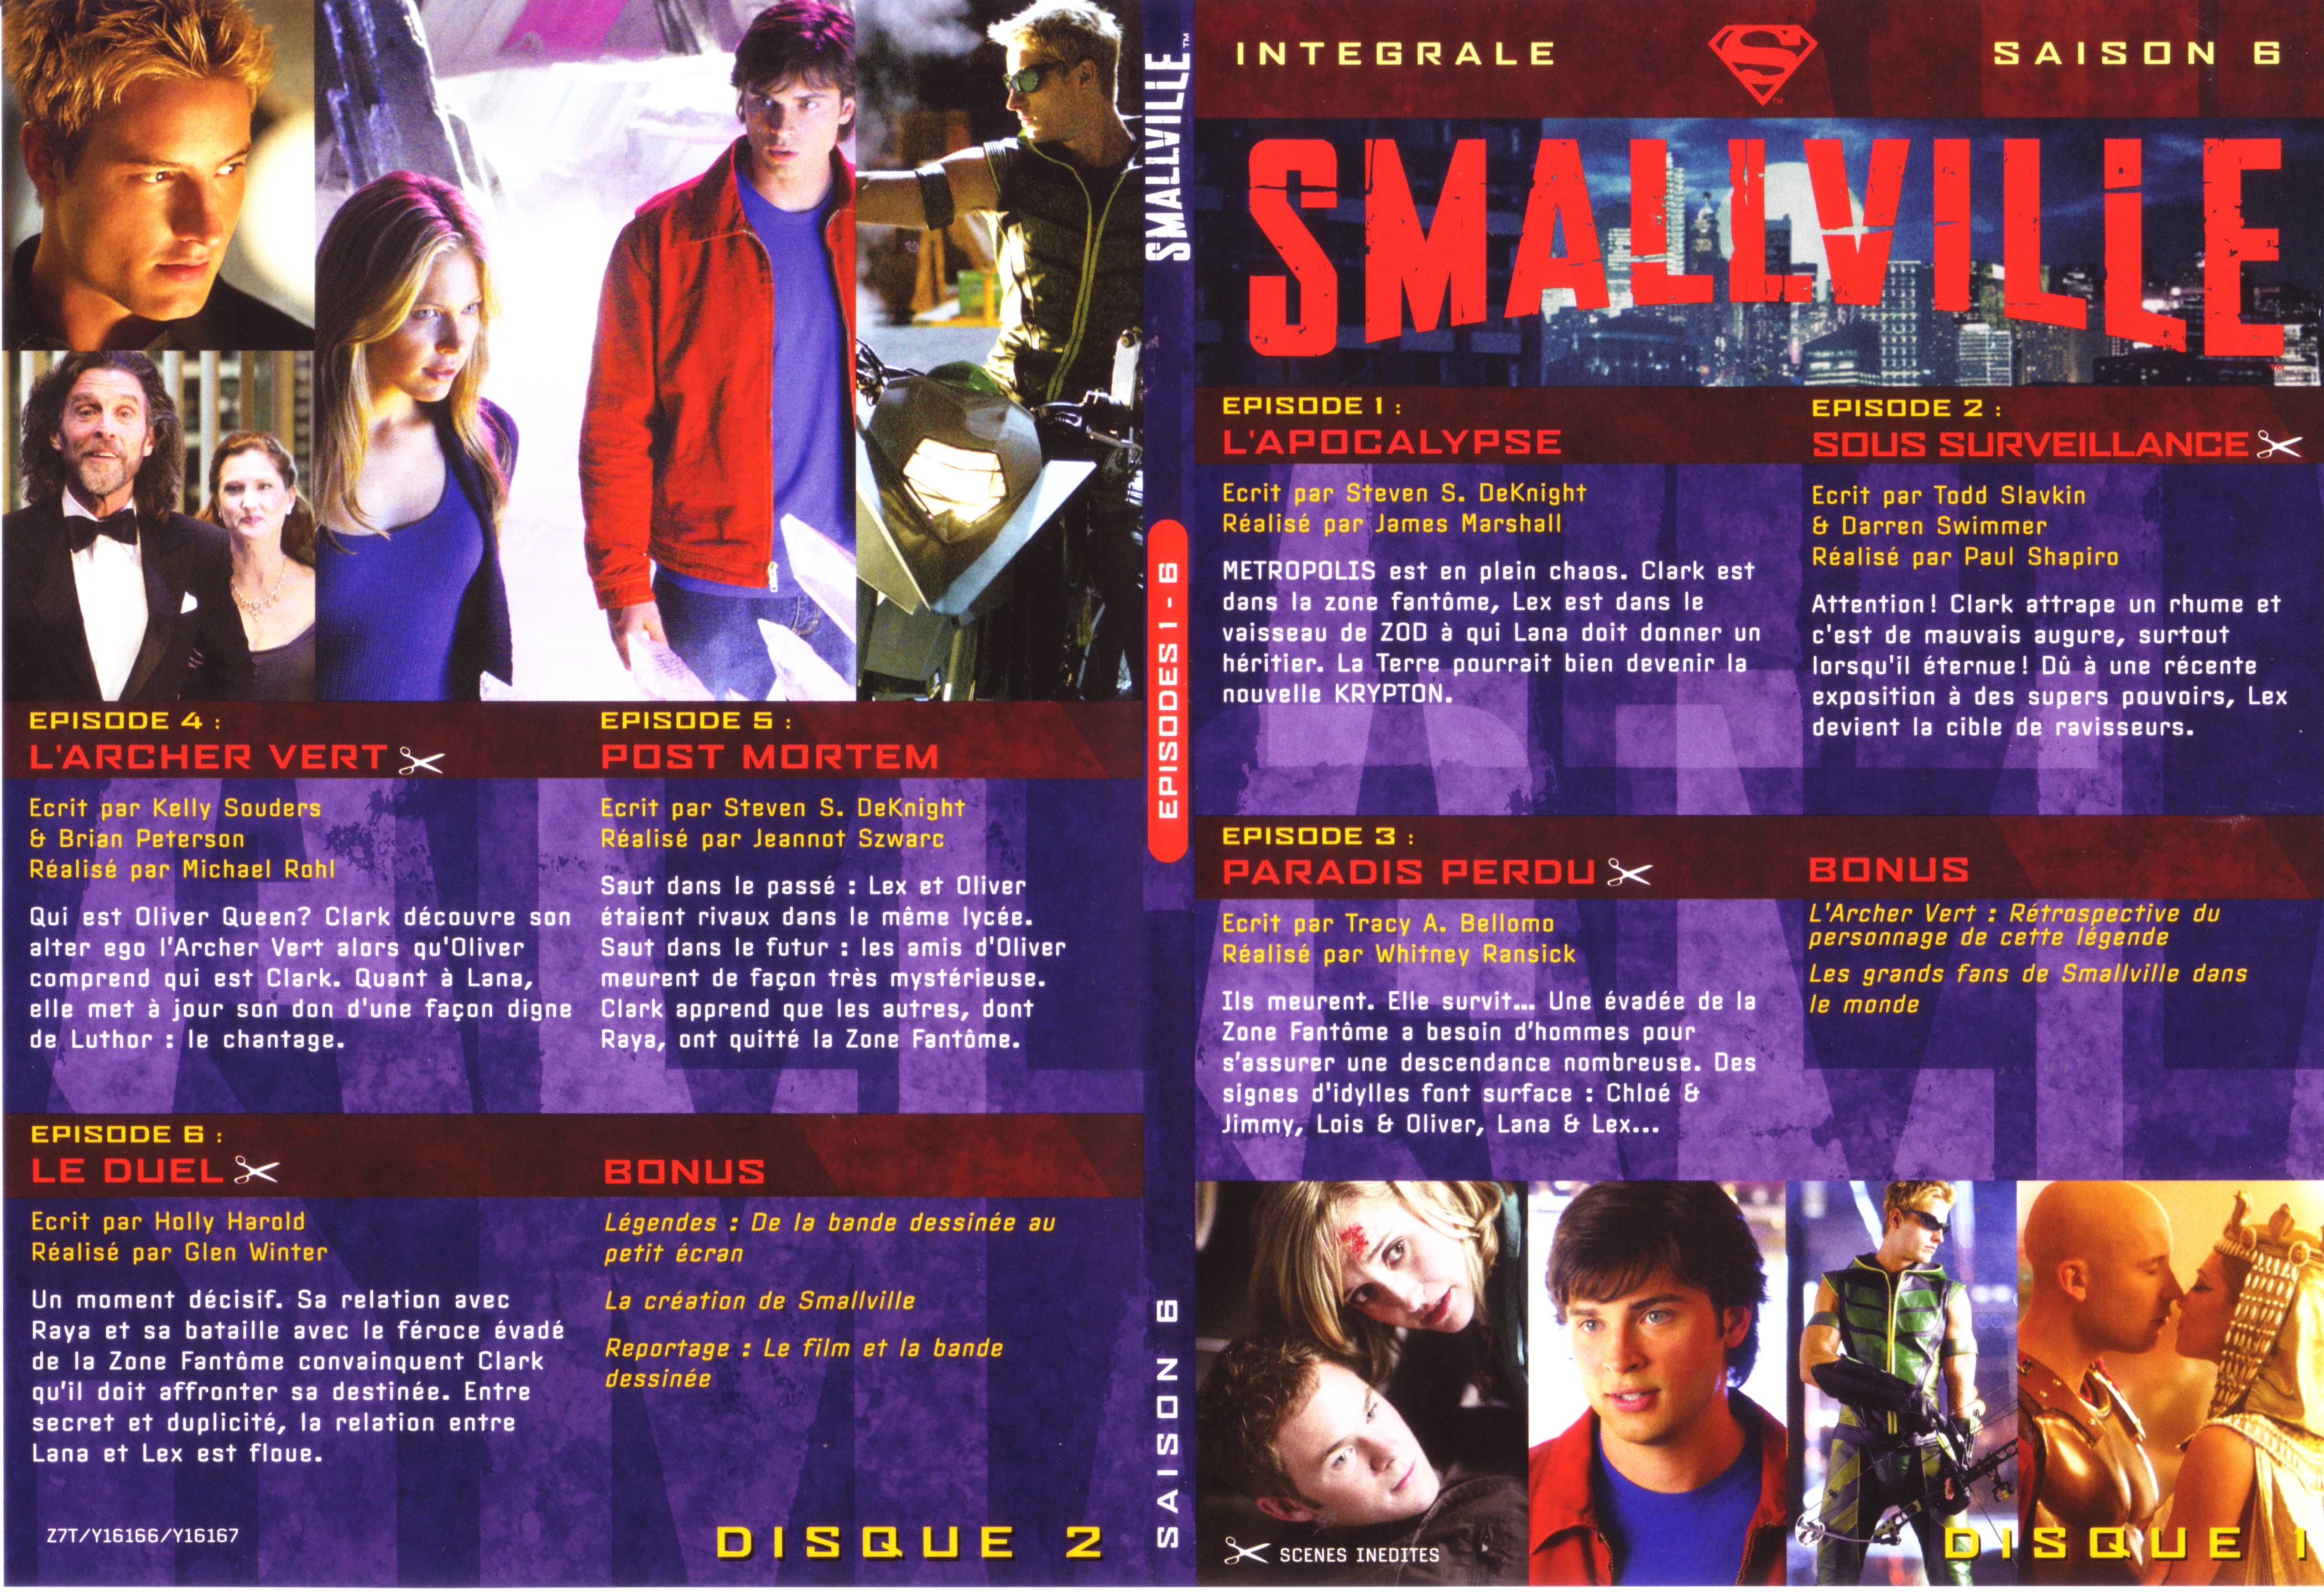 Jaquette DVD Smallville saison 6 DVD 1